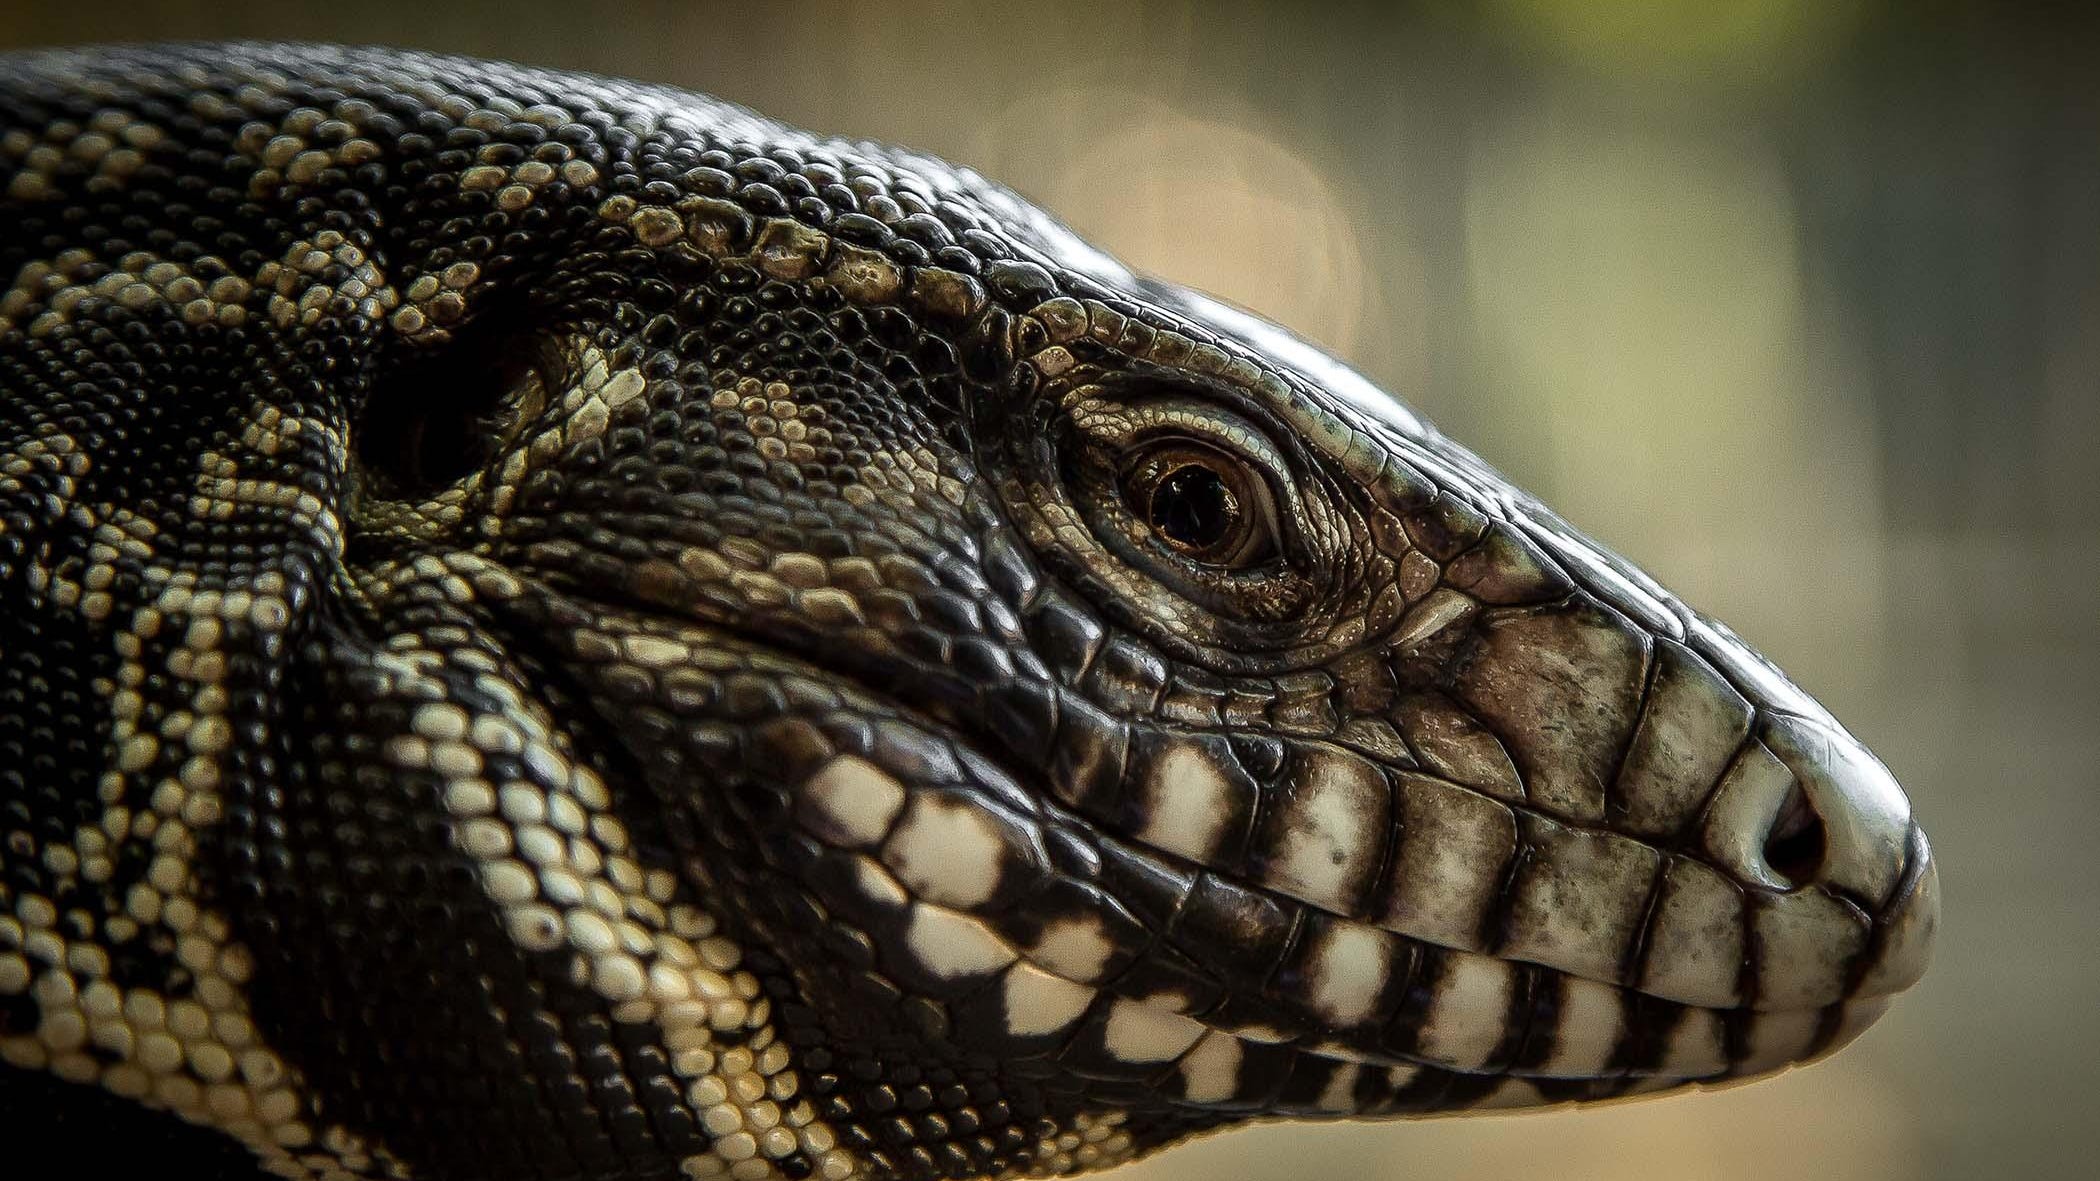 Opinion: Tegu lizards from South America are invading South Carolina